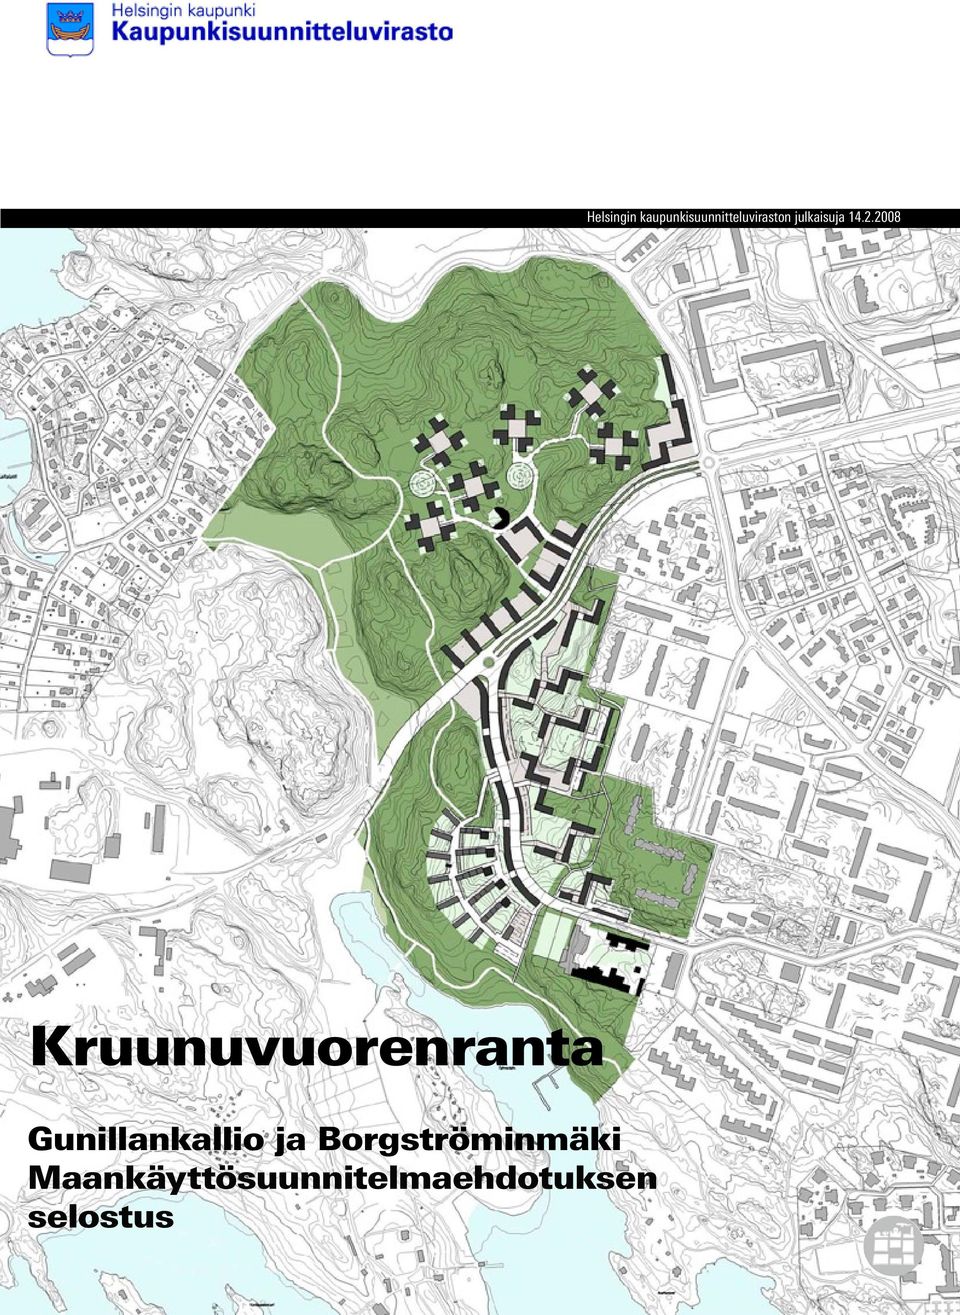 2008 2007:x Kruunuvuorenranta